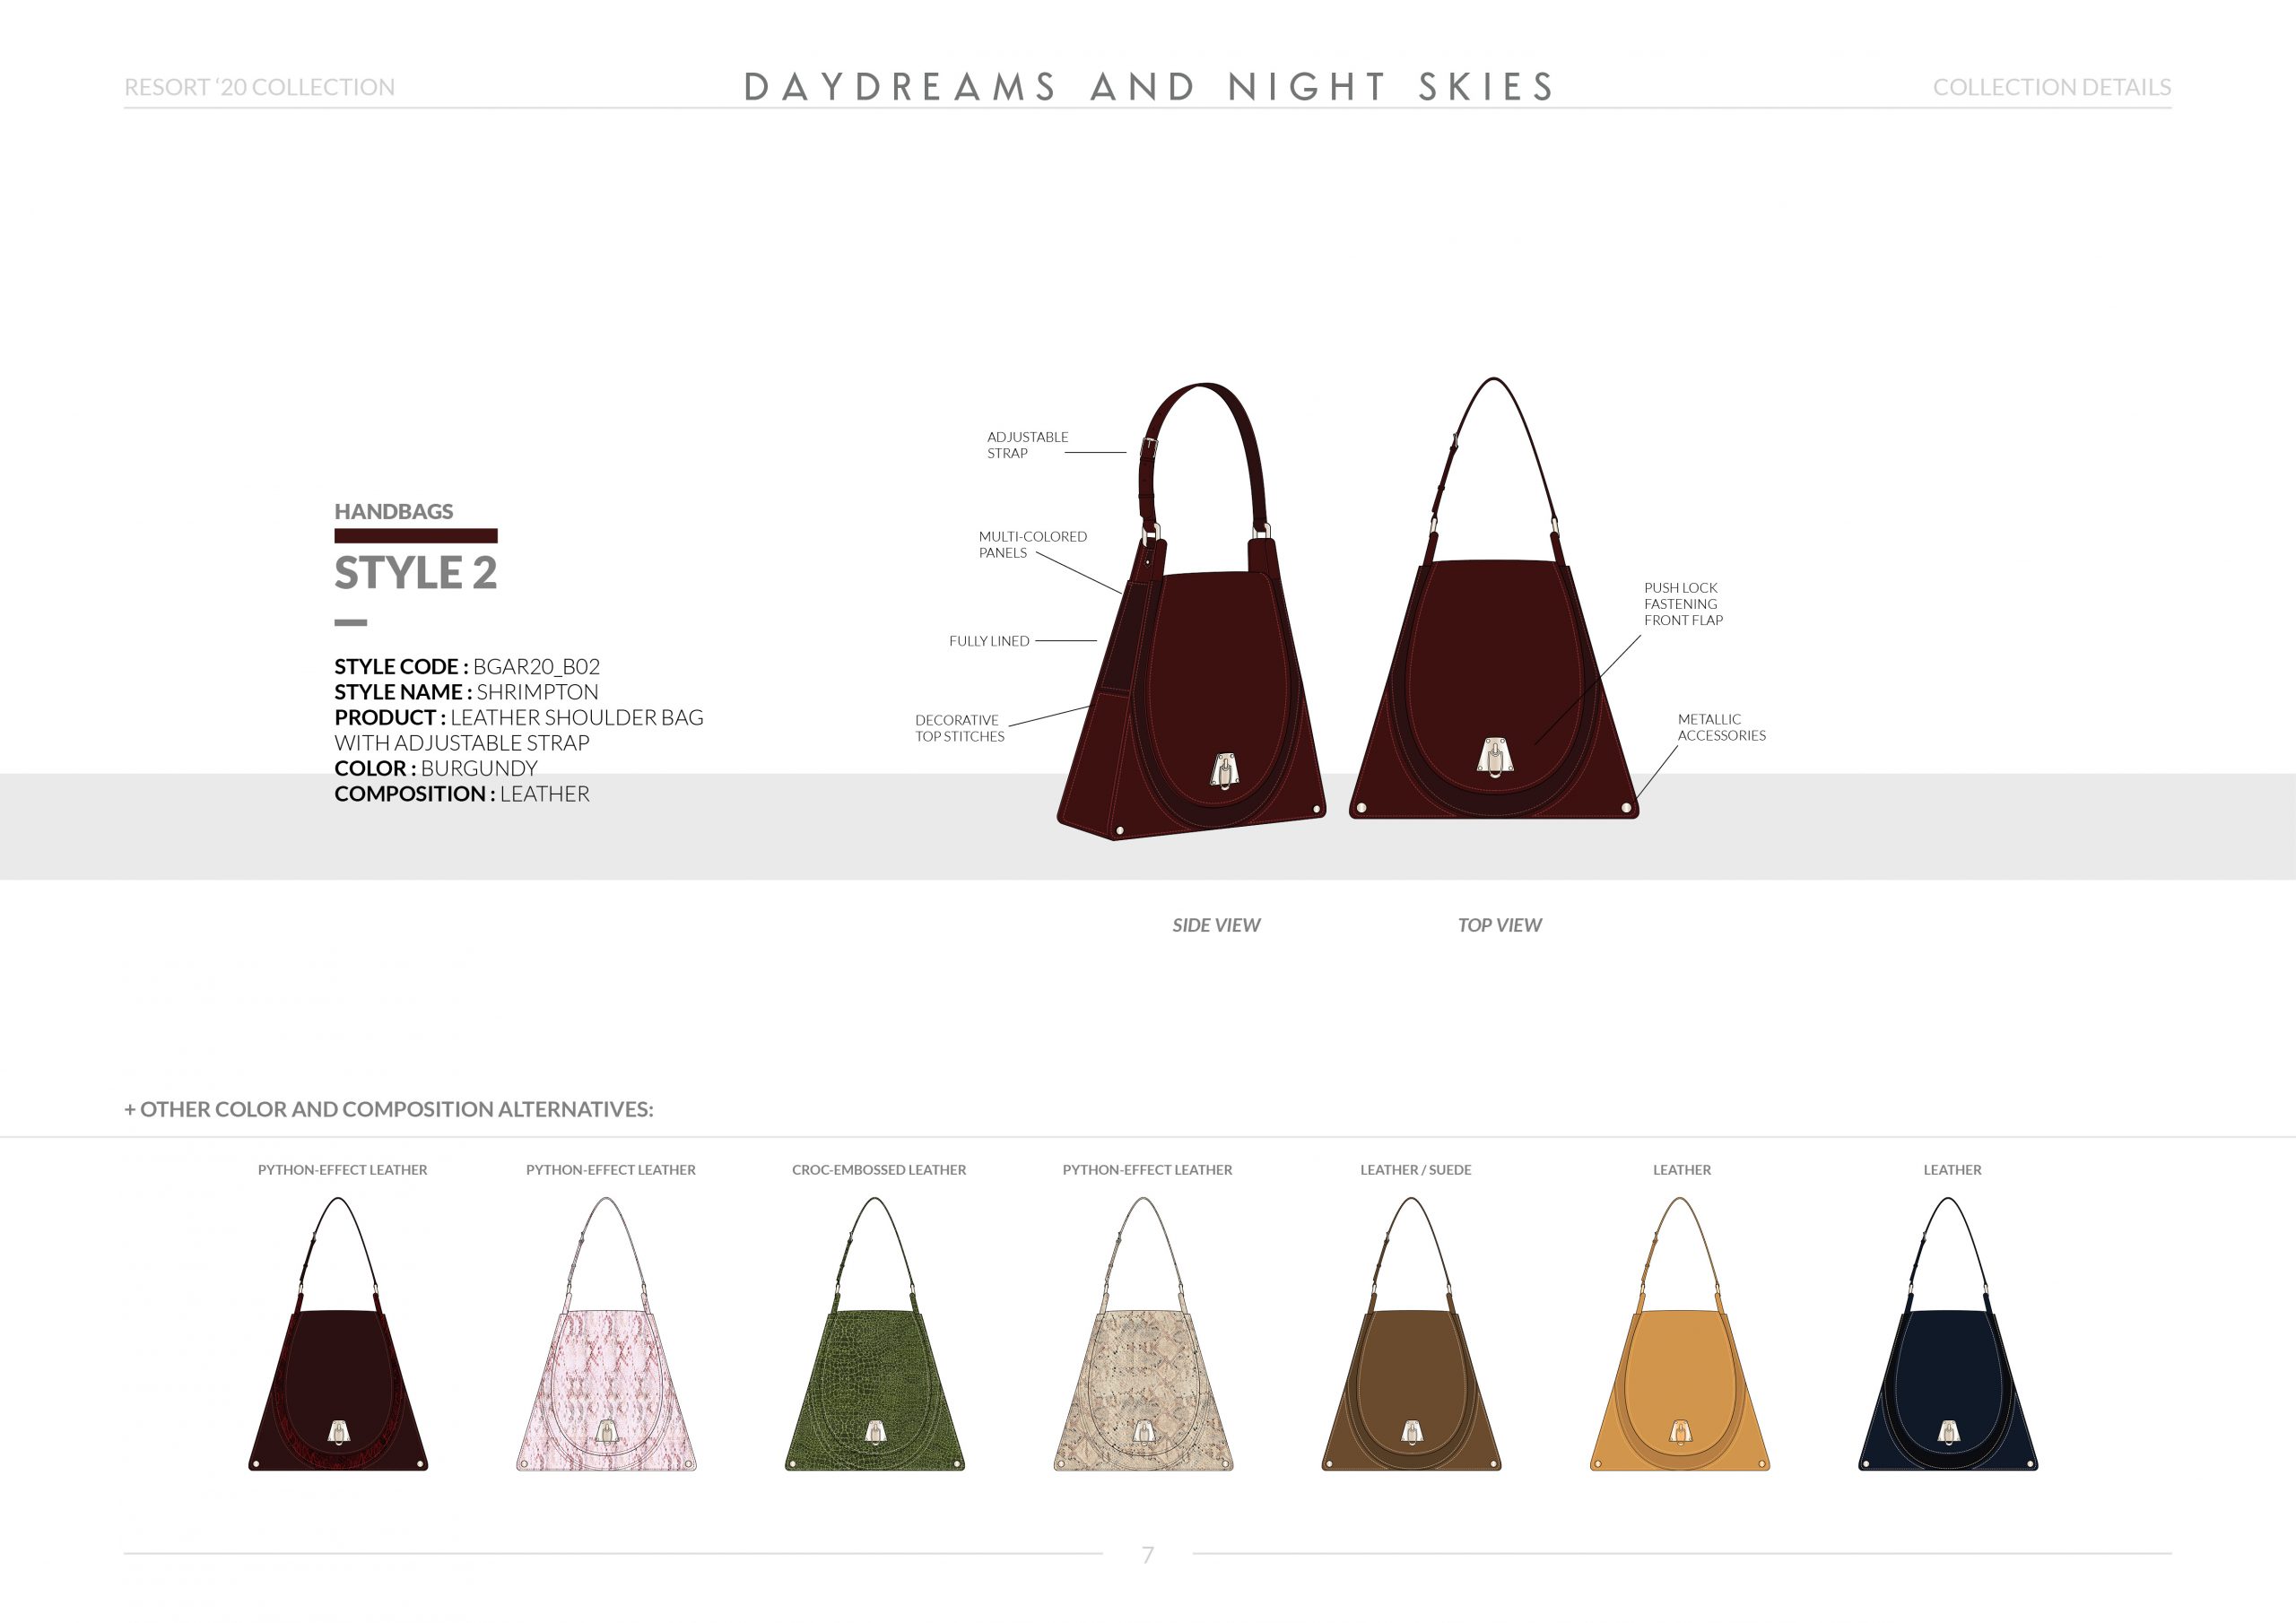 Resort-20 Womens Handbag Collection Details: Style 2